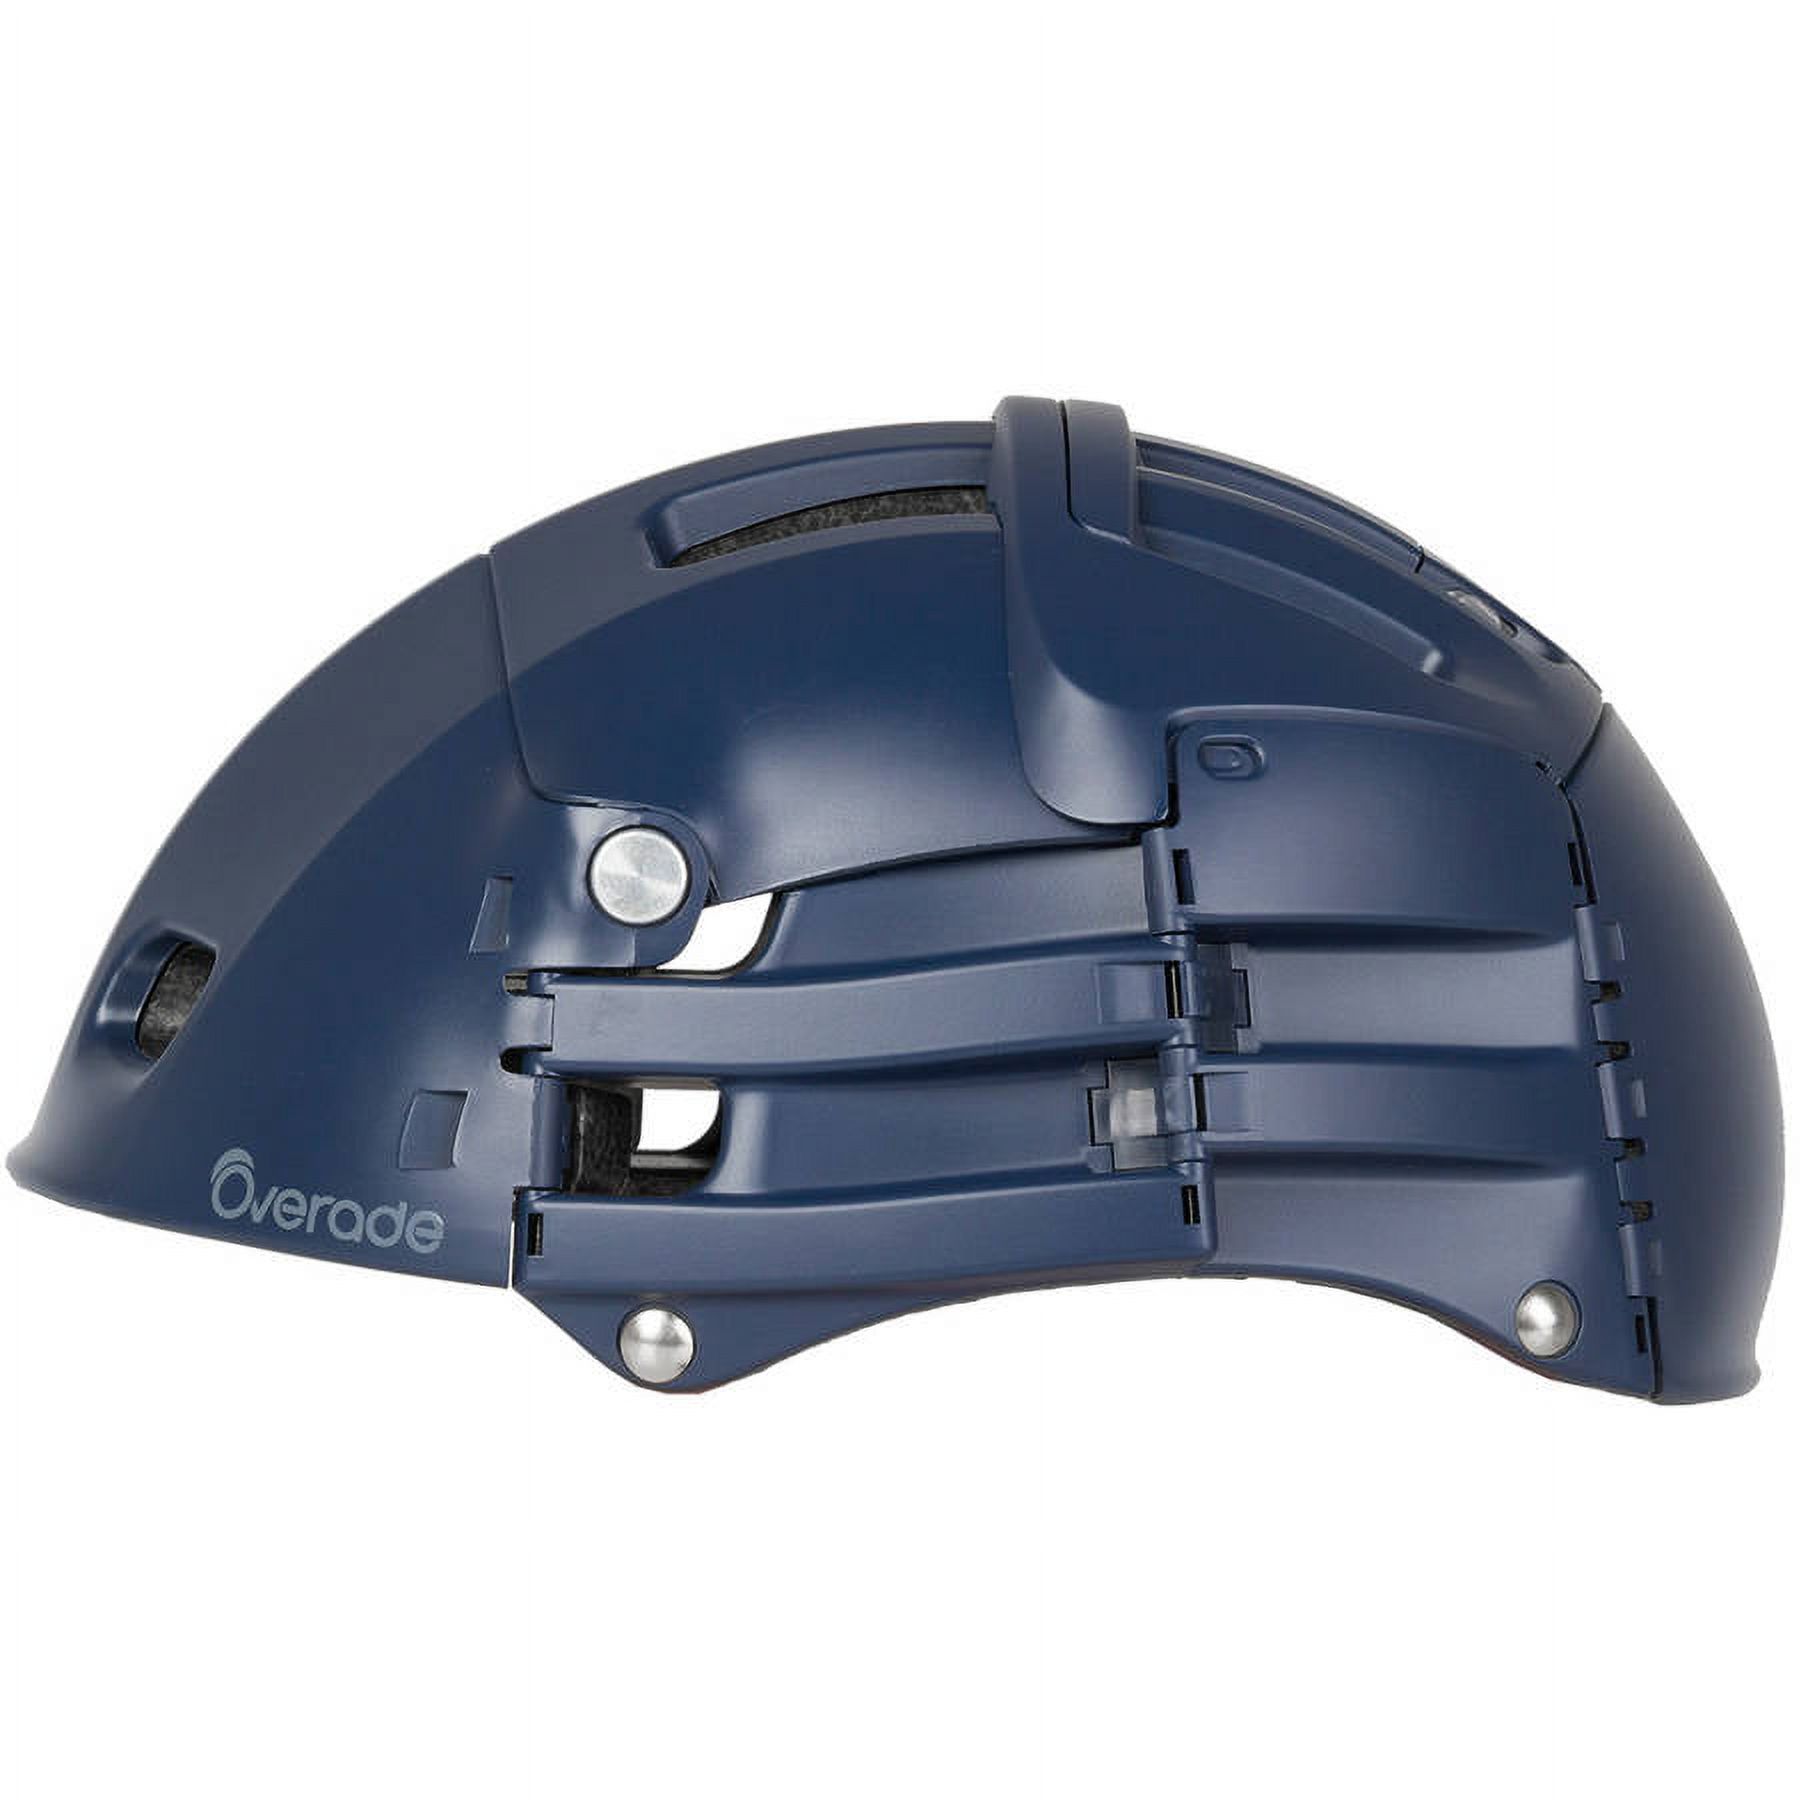 Overade Plixi Foldable Bicycle Helmet, Navy Blue, 54-58cm - image 3 of 11